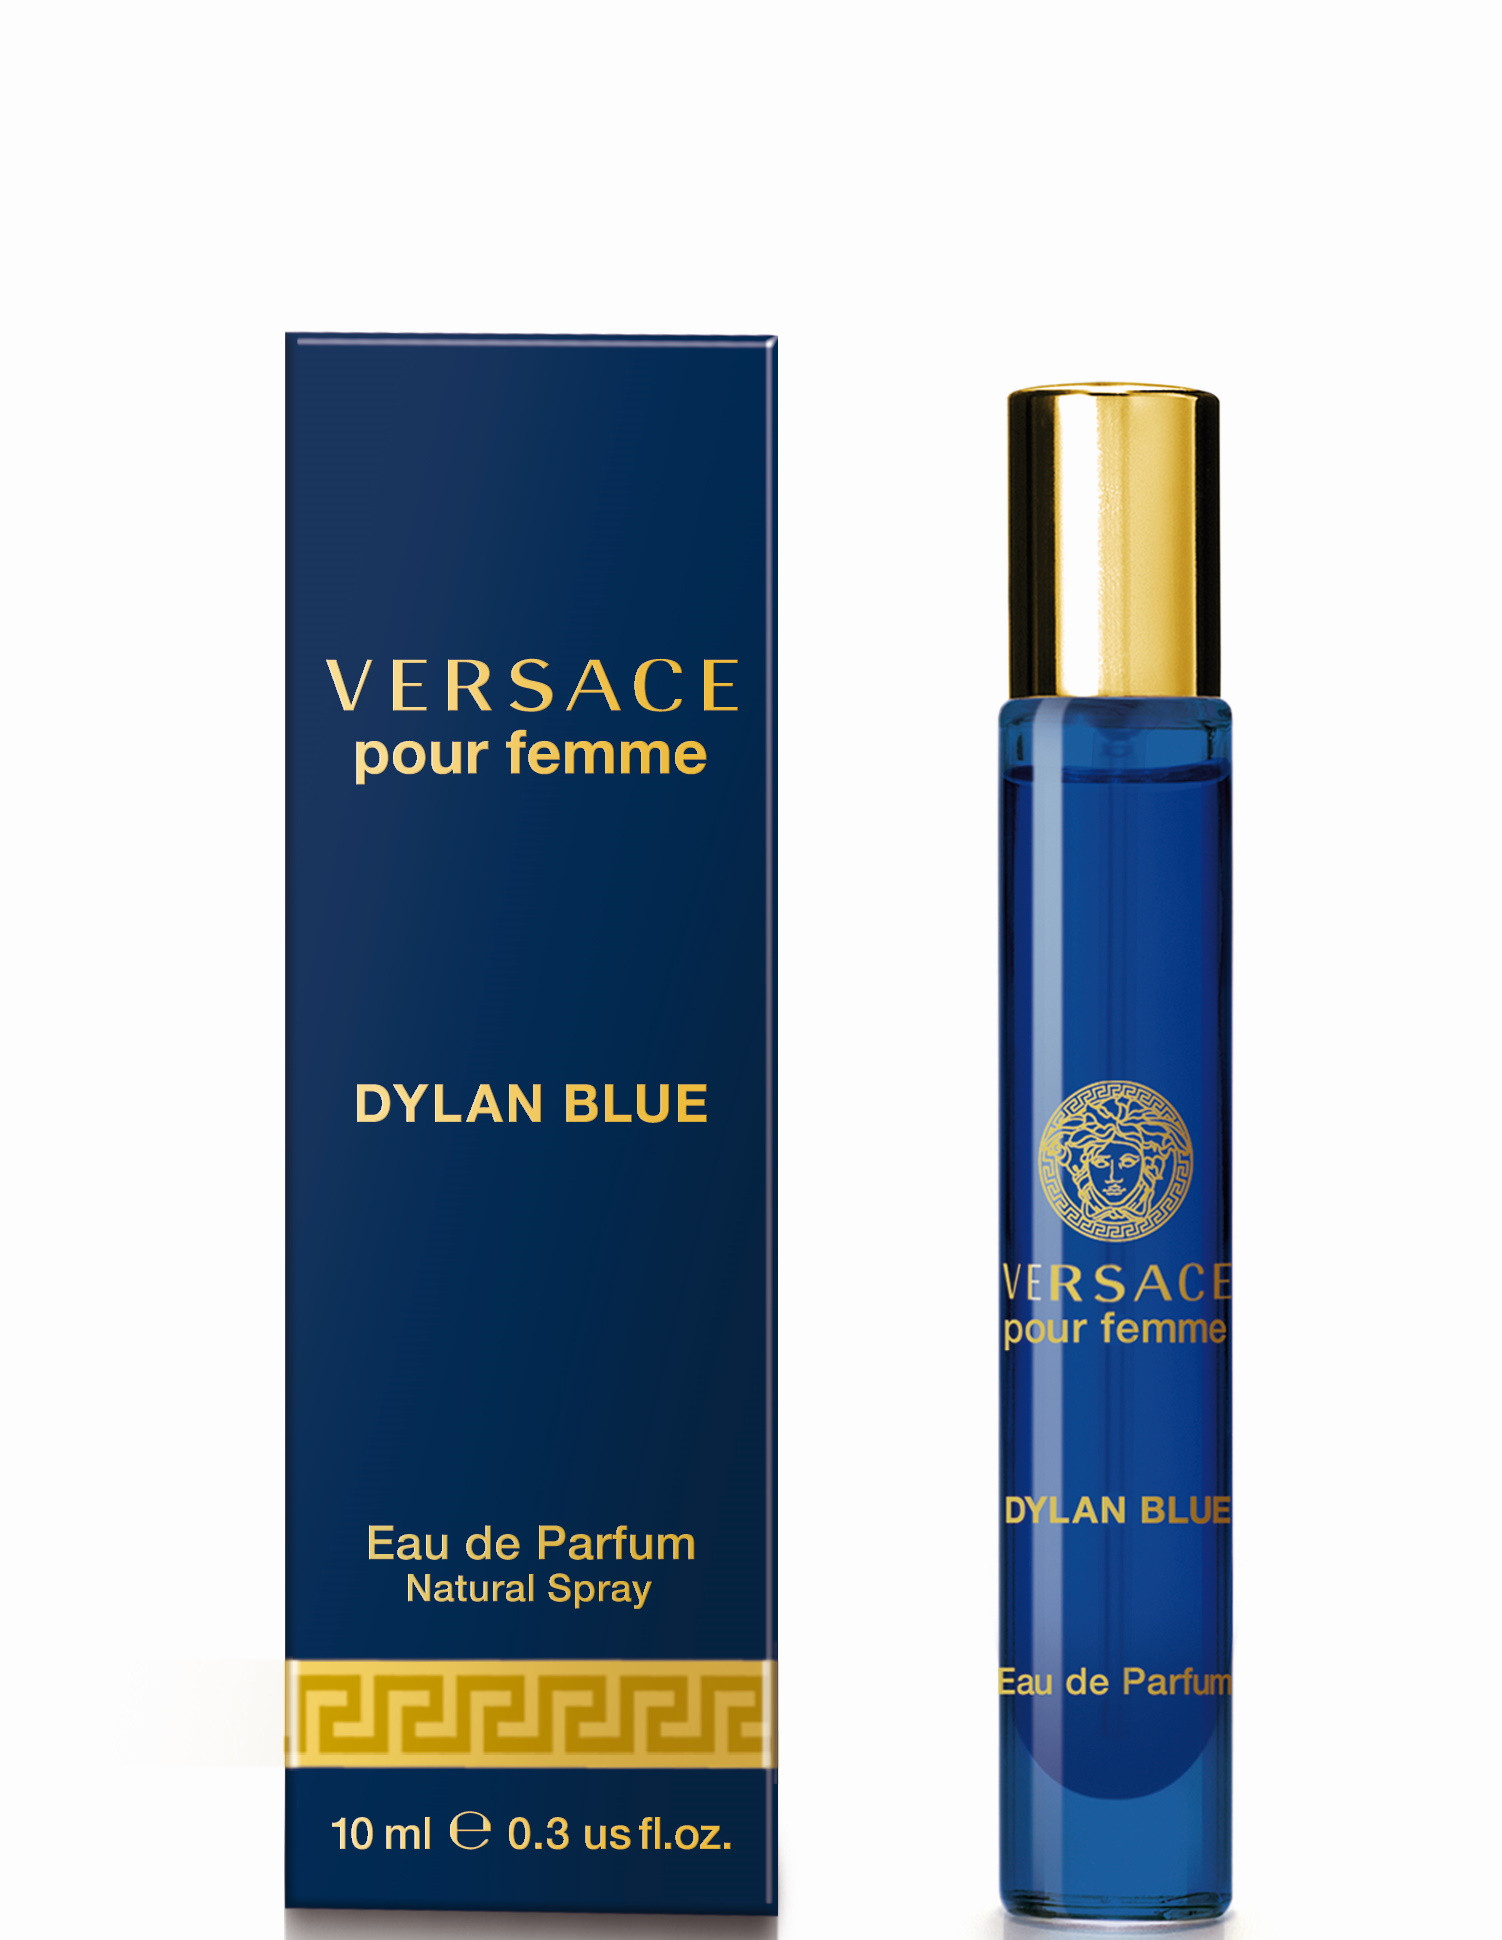 versace dylan blue